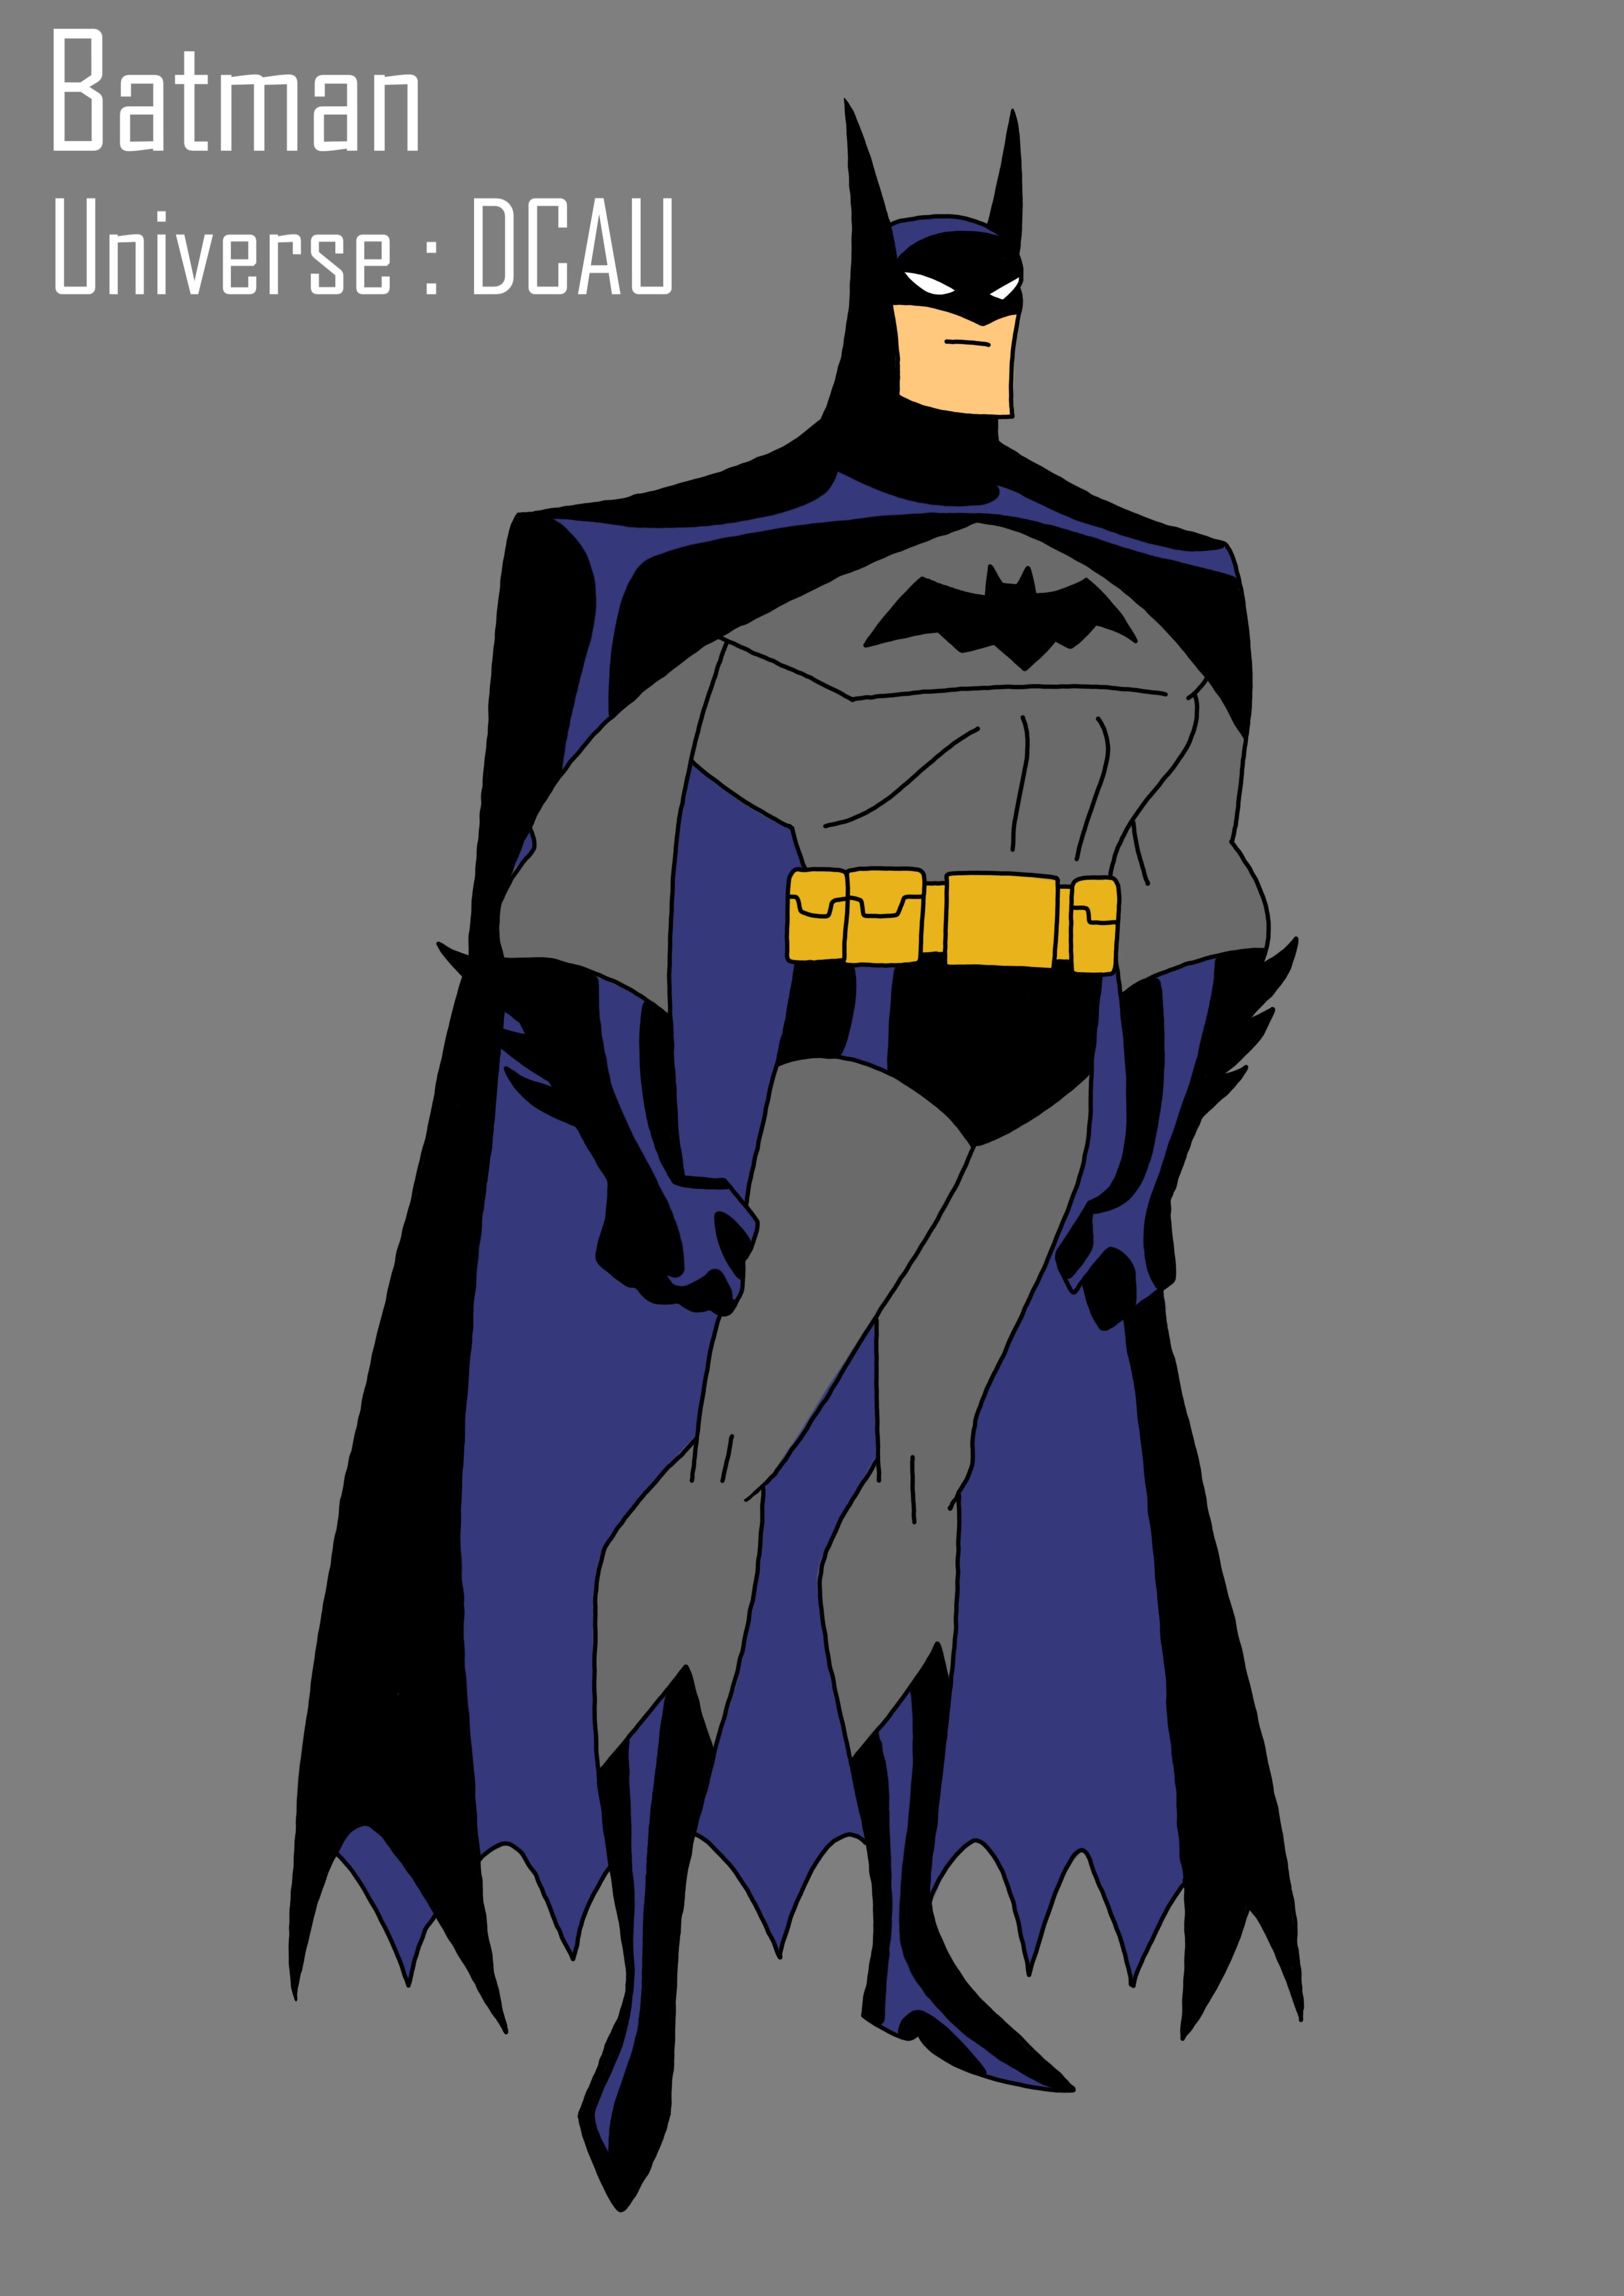 Batman : DCAU (JLU) by dragonkid17 on DeviantArt